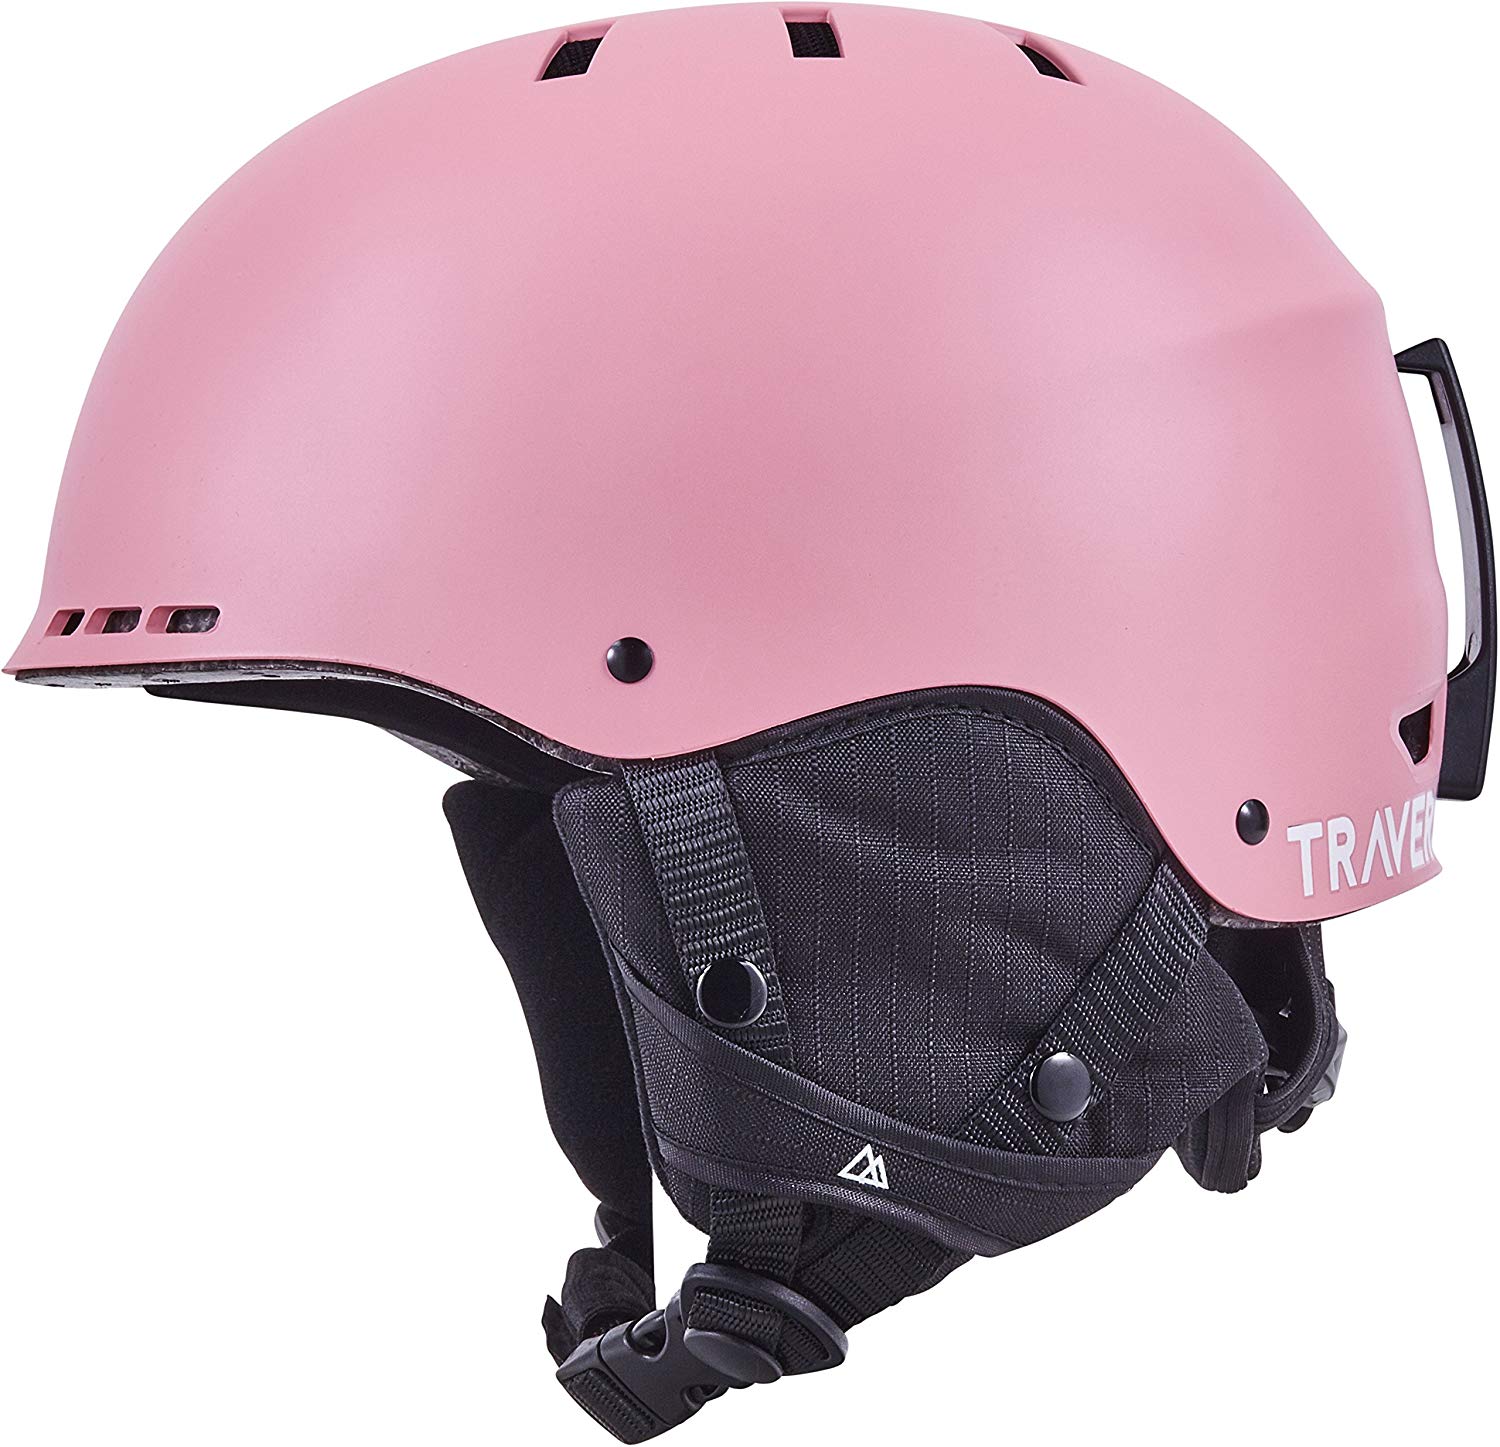 Retrospec Traverse H2 2-in-1 Convertible Cheap Girls Ski Helmets